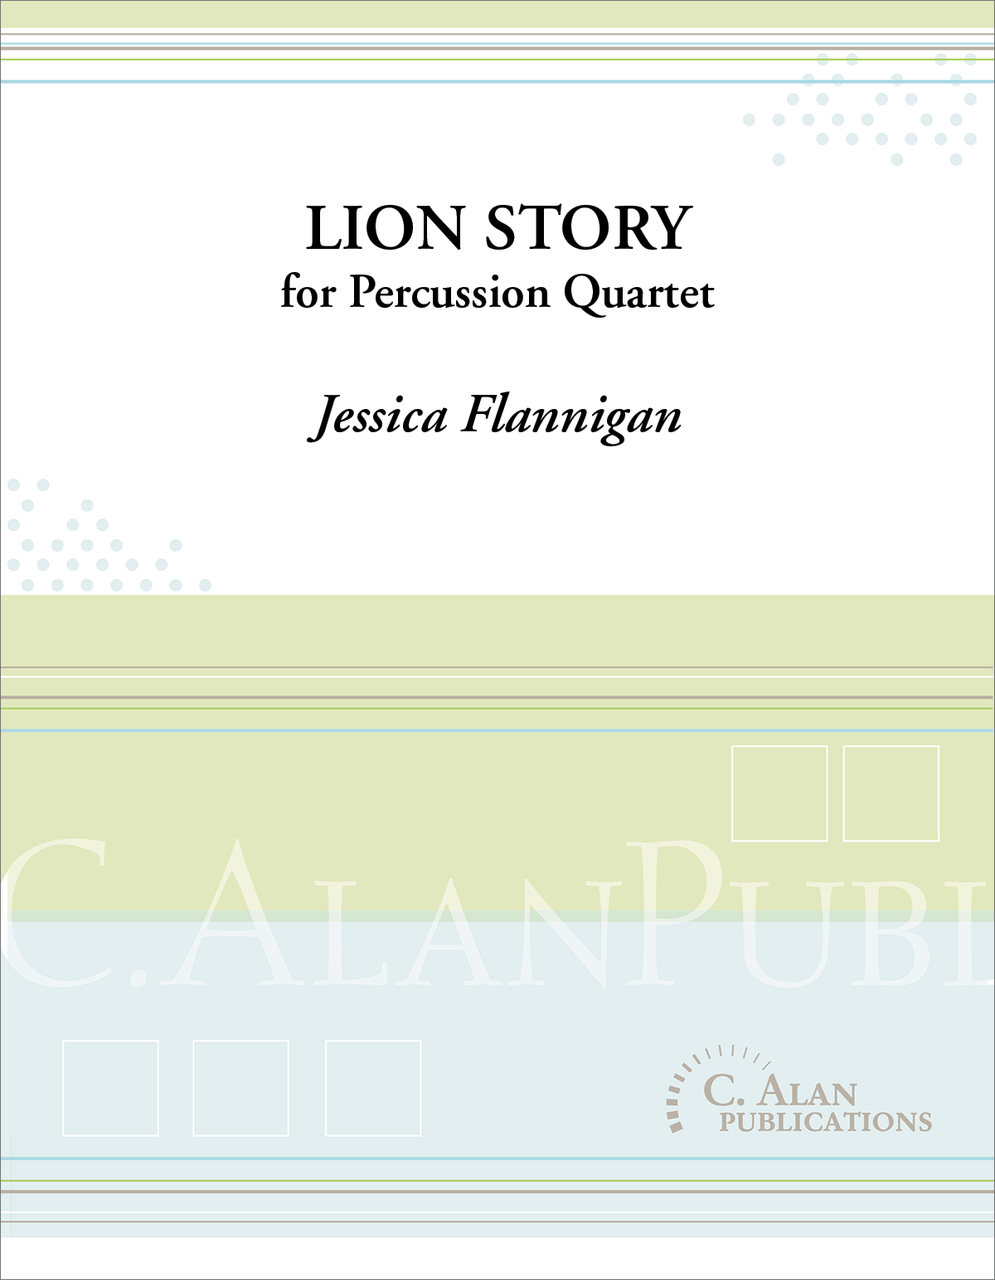 Lion Story by Jessica Flanningan